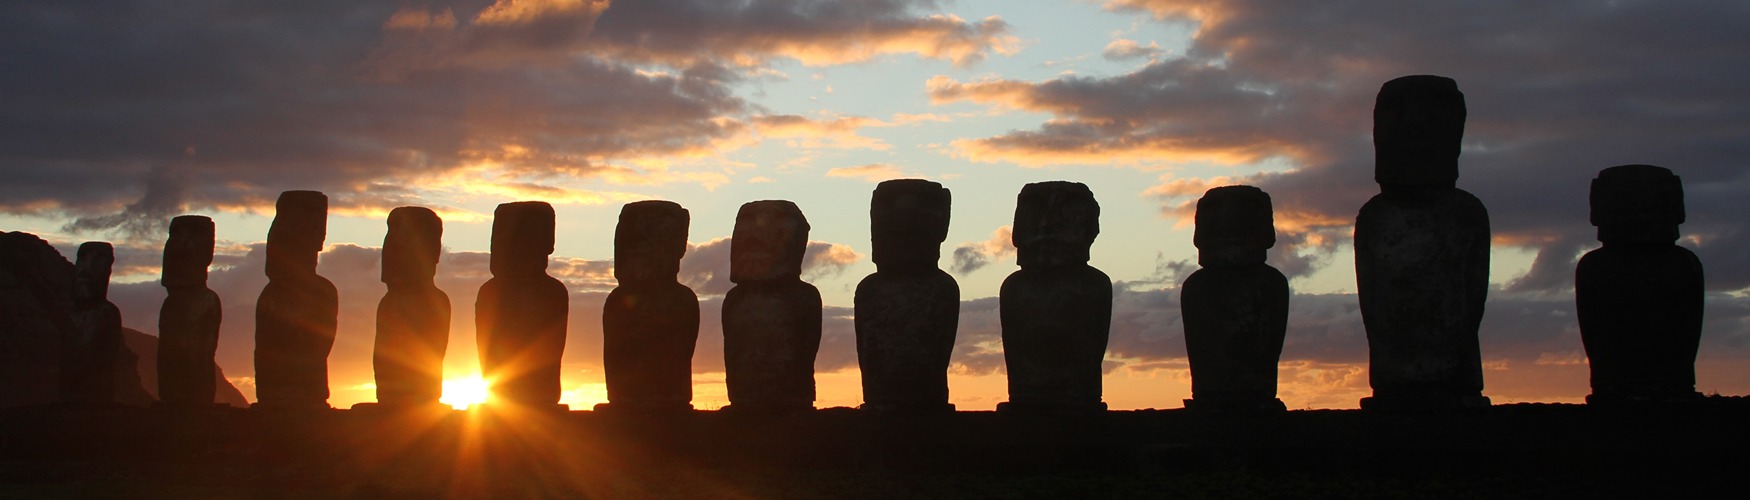 Easter Island at sunrise